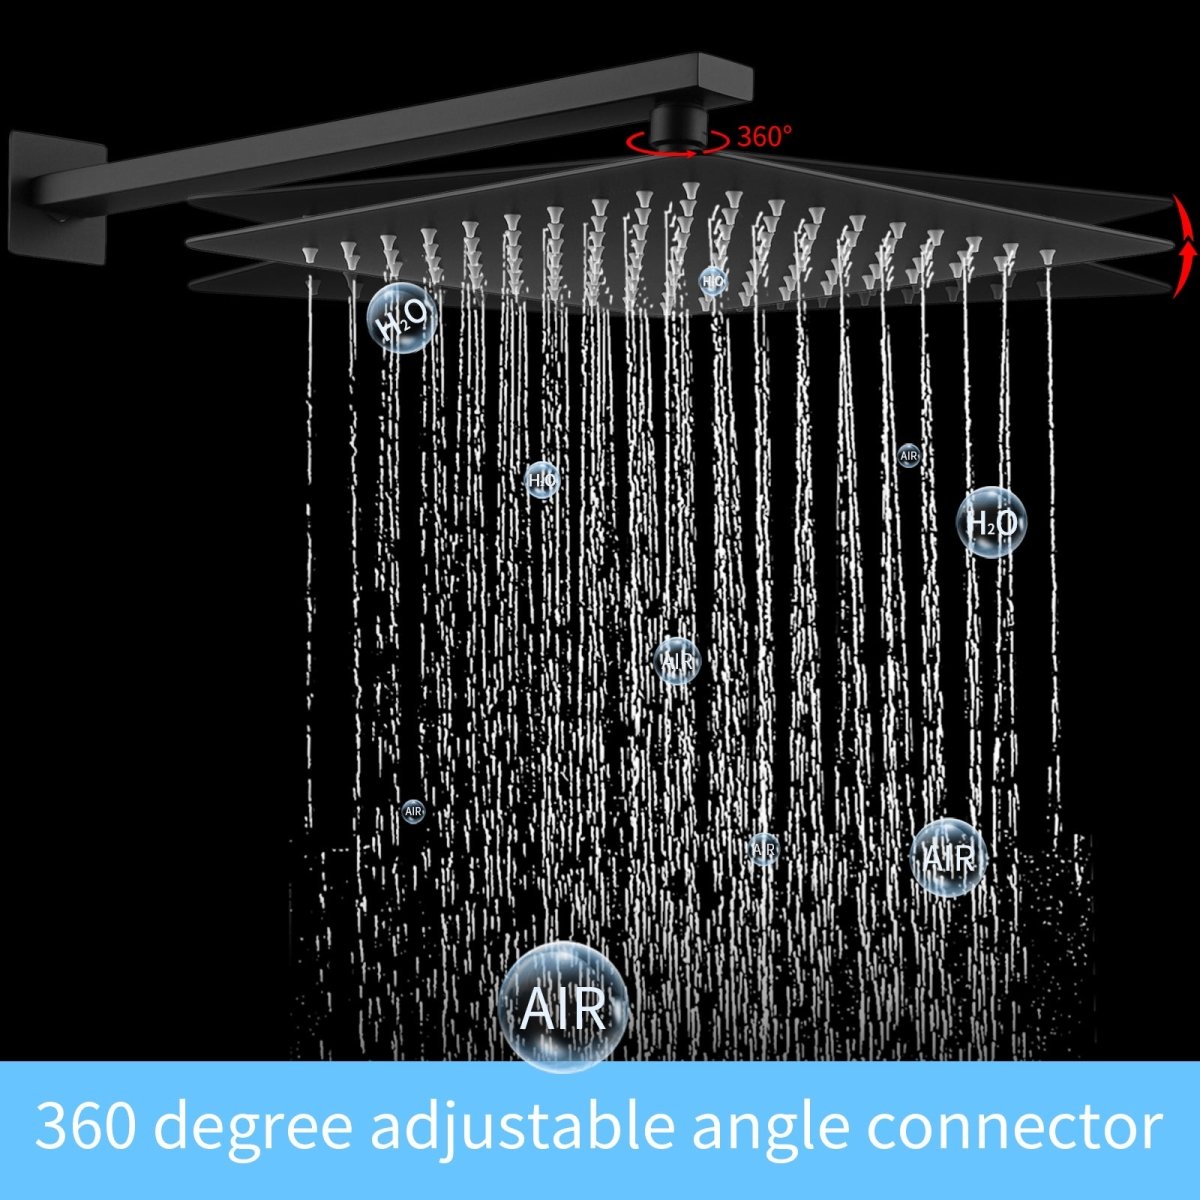 ExBrite Shower System Shower Faucet Combo Set Wall Mounted with 12" Rainfall Shower Head Set Matt Black Finish